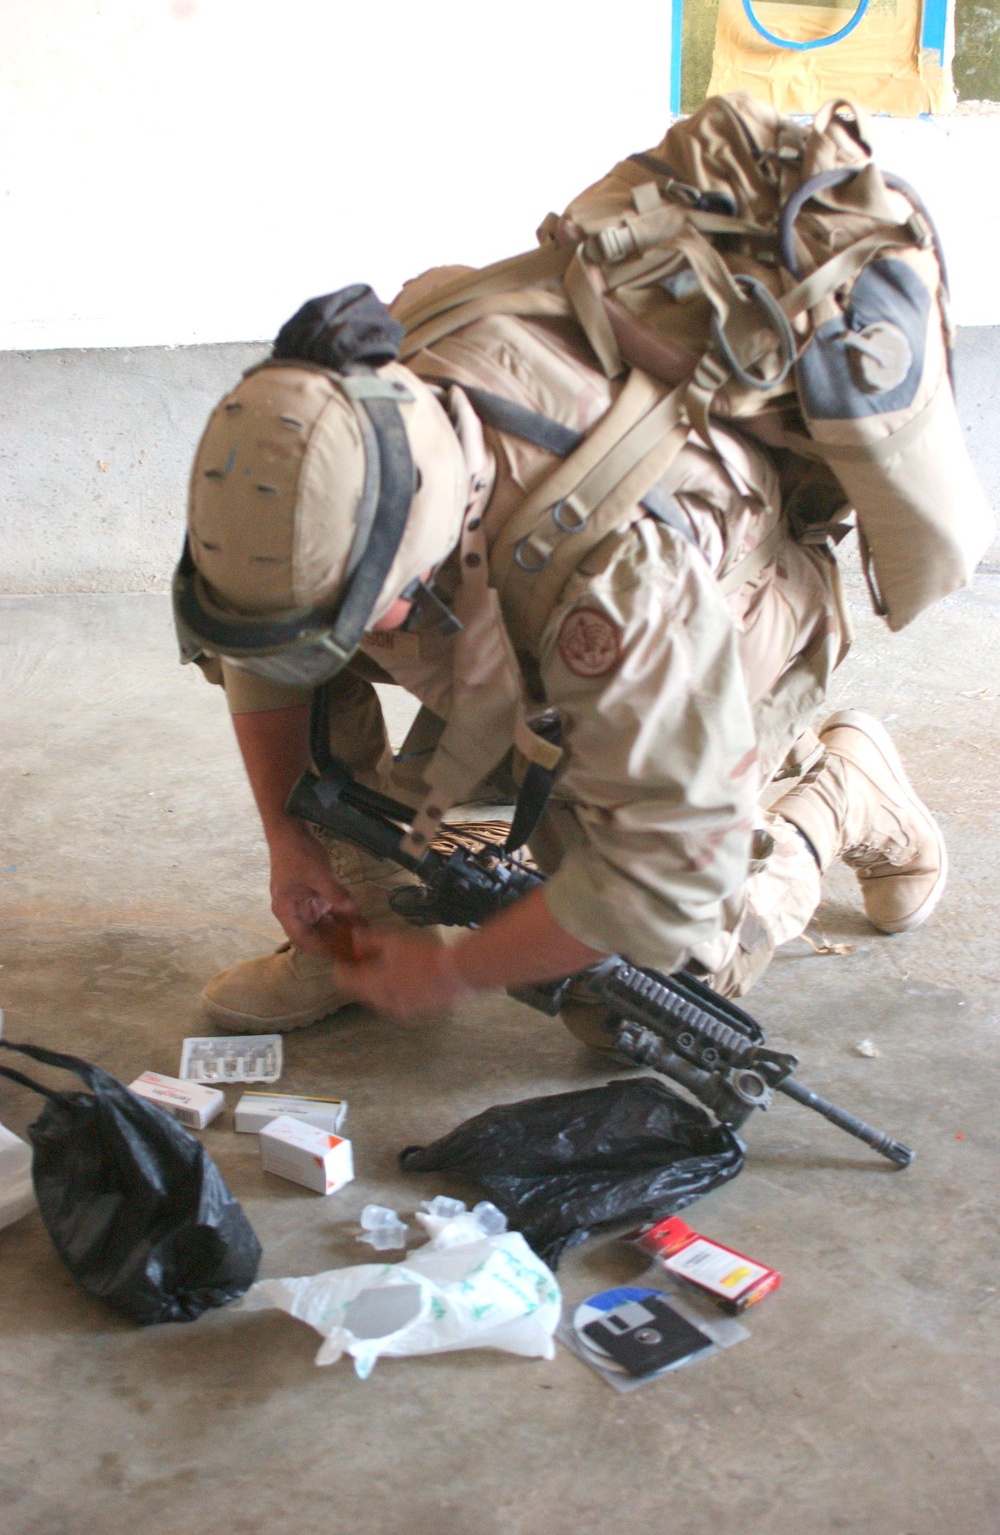 A 3rd ACR Soldier searches through medical supplies.